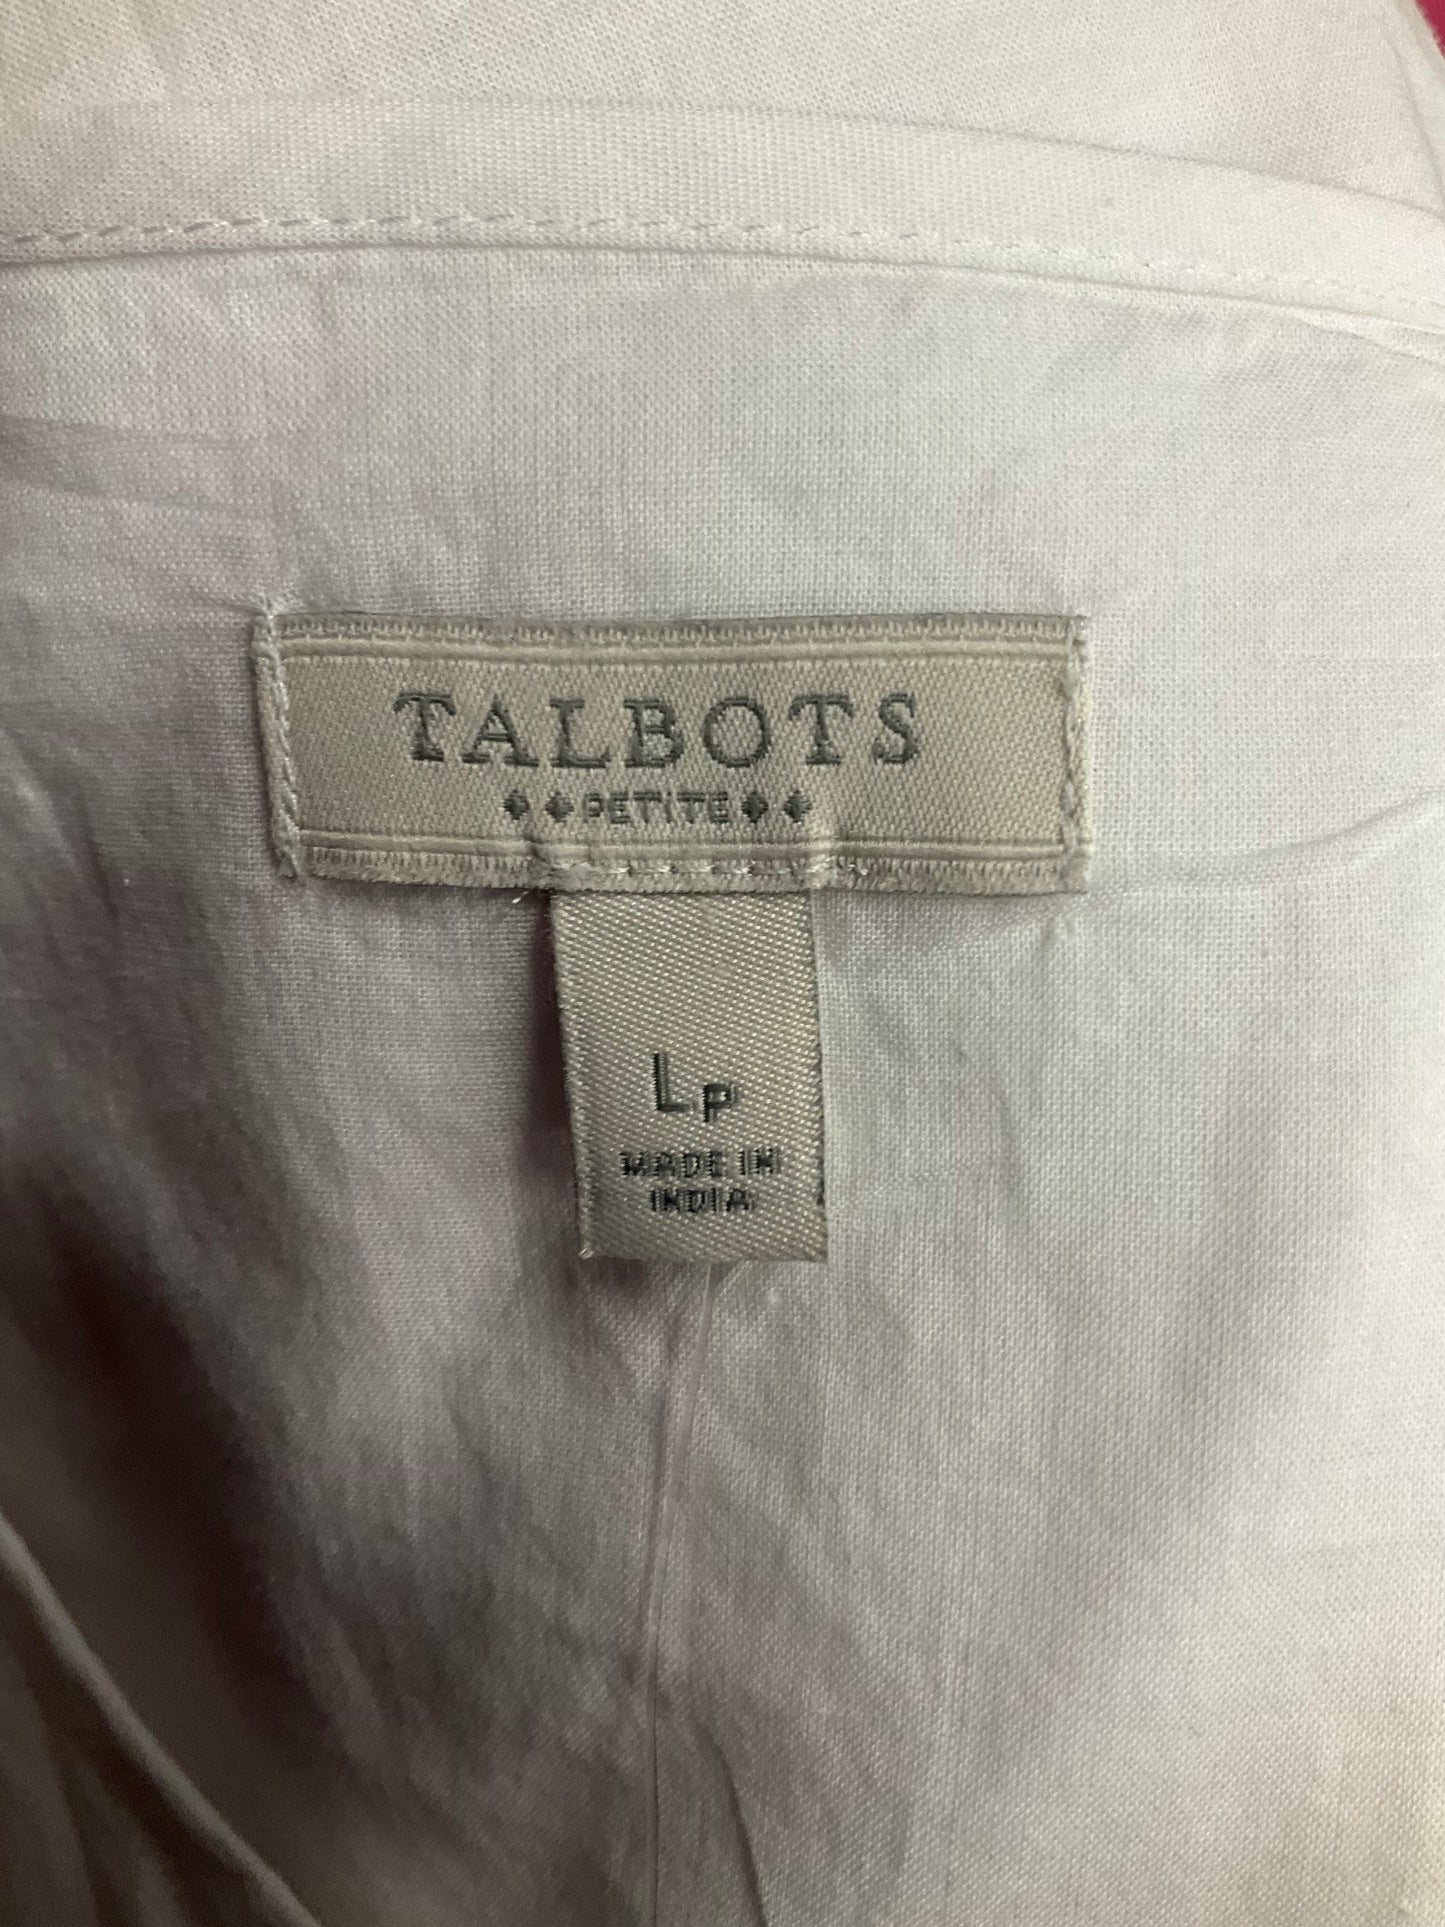 White Top Sleeveless Talbots, Size L